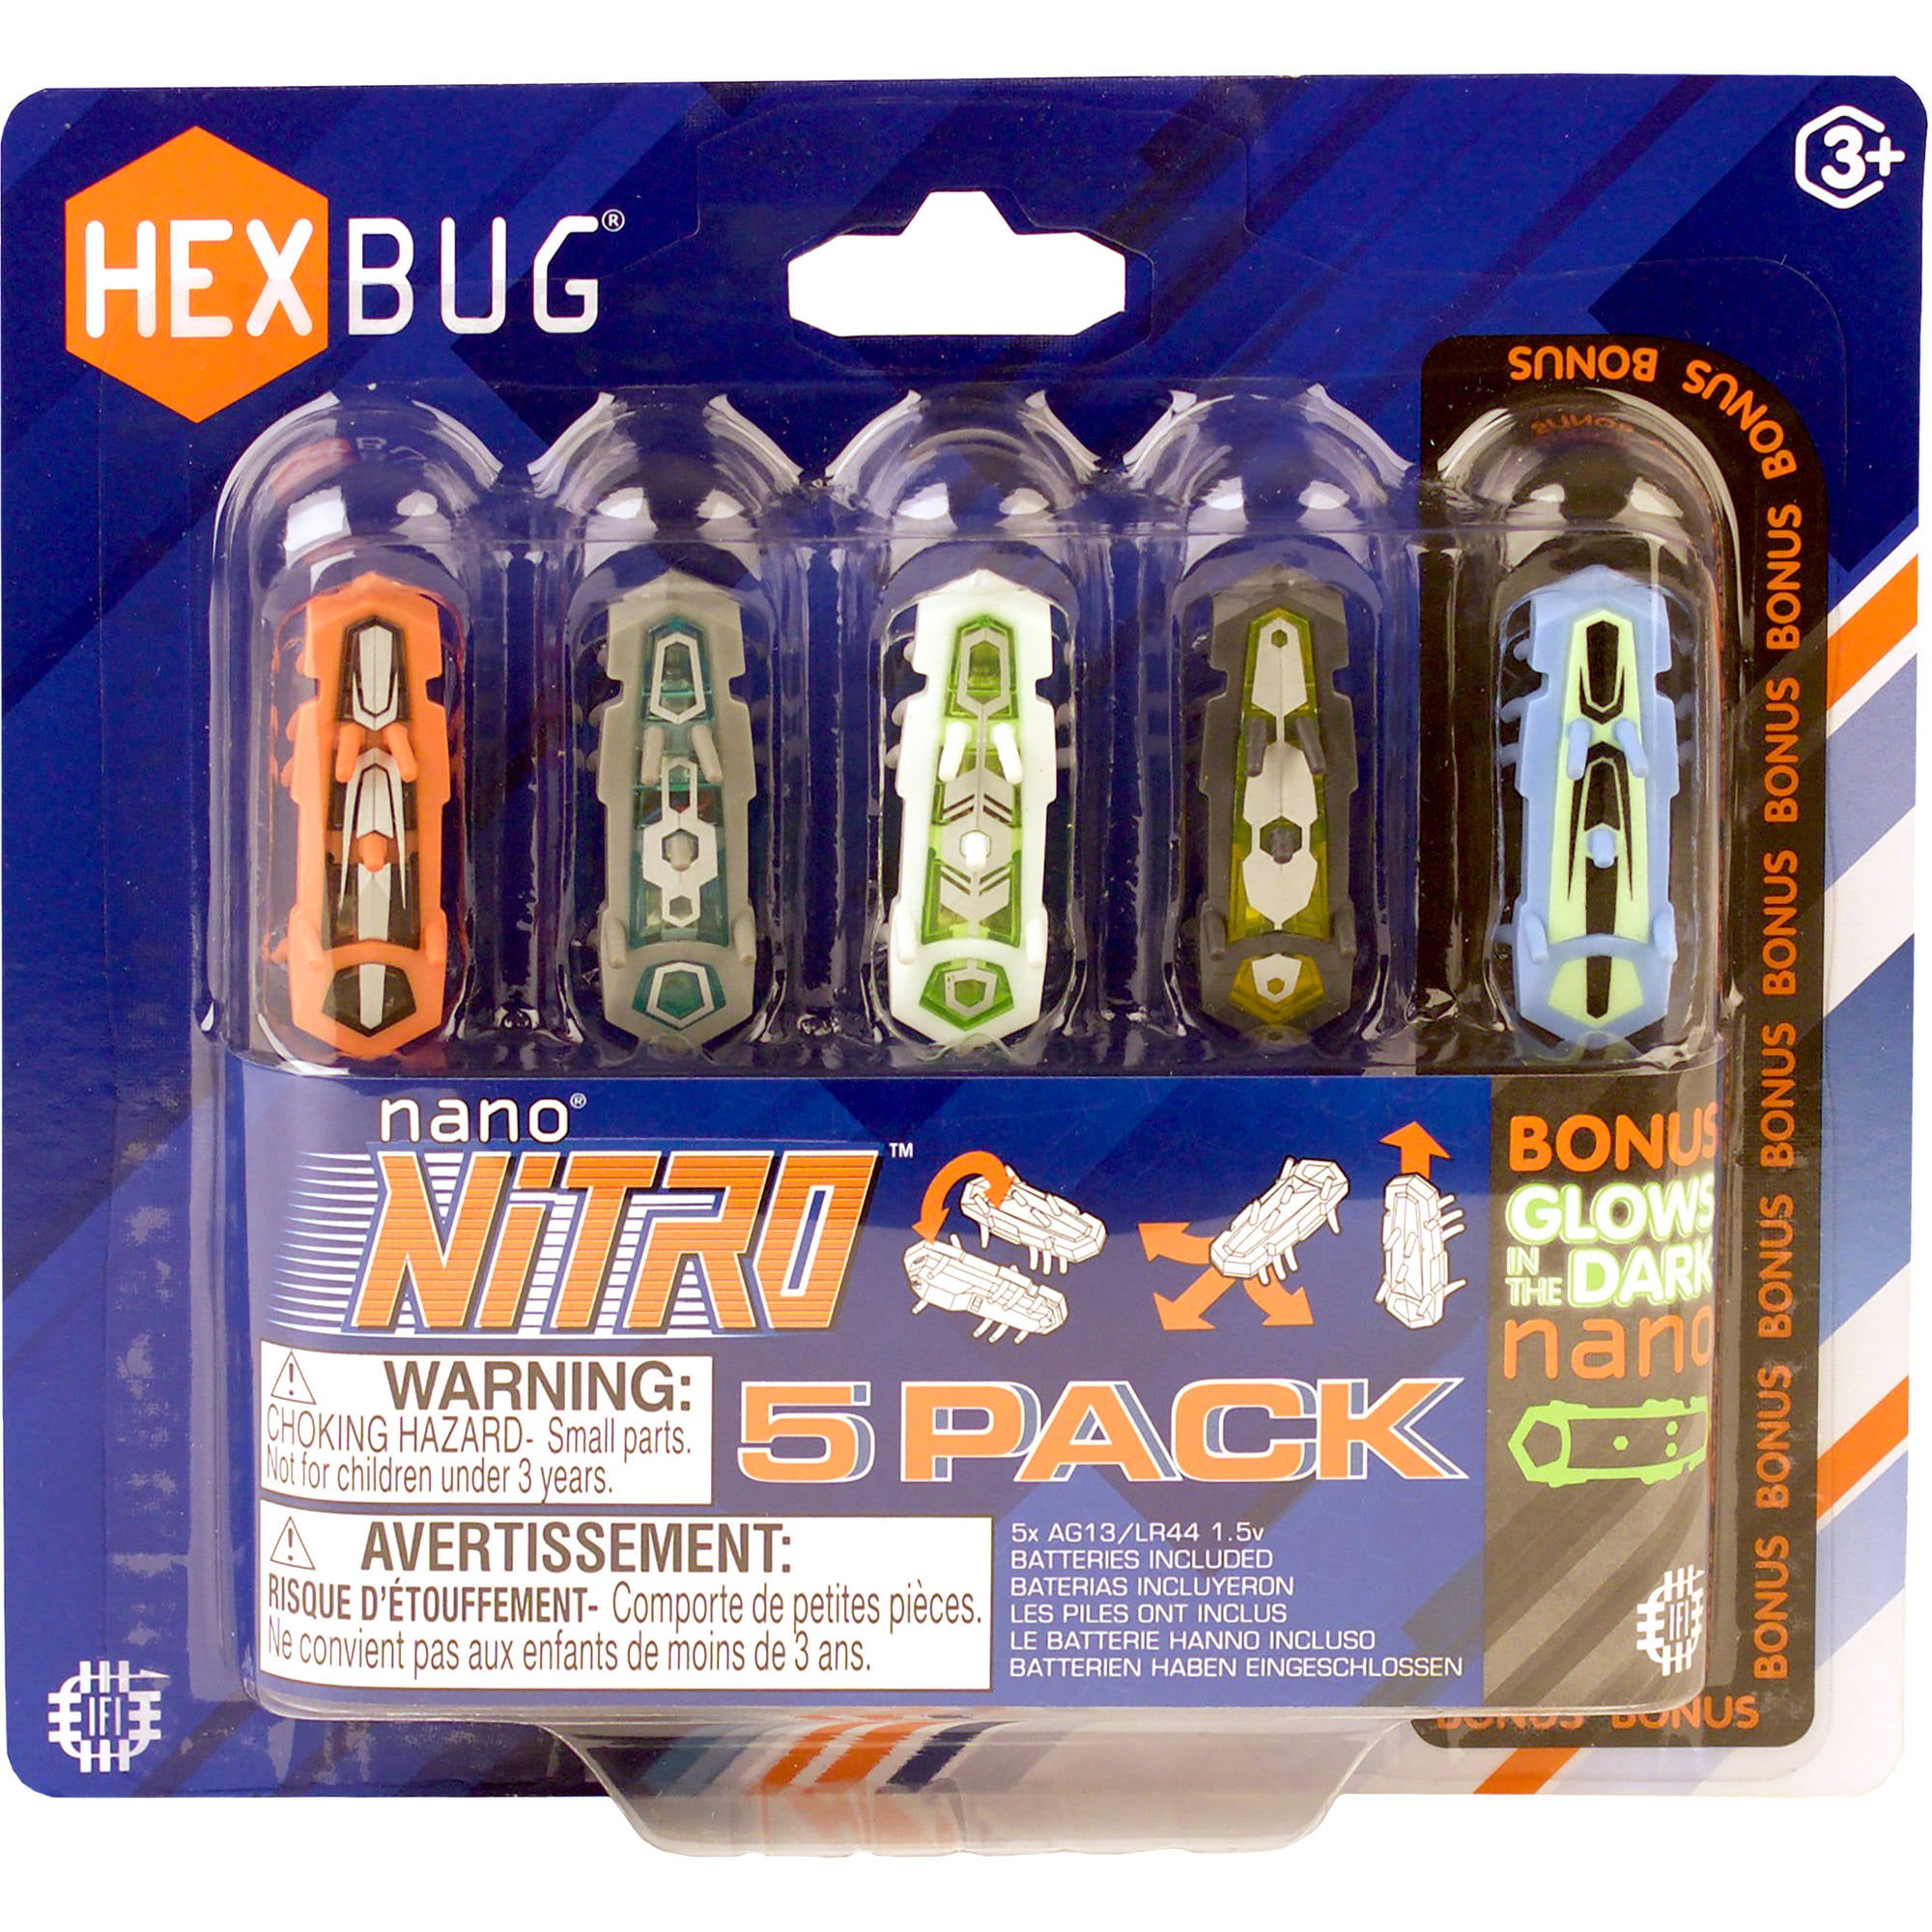 HEXBUG Nano Nitro Bugs 5 Pack Toy 